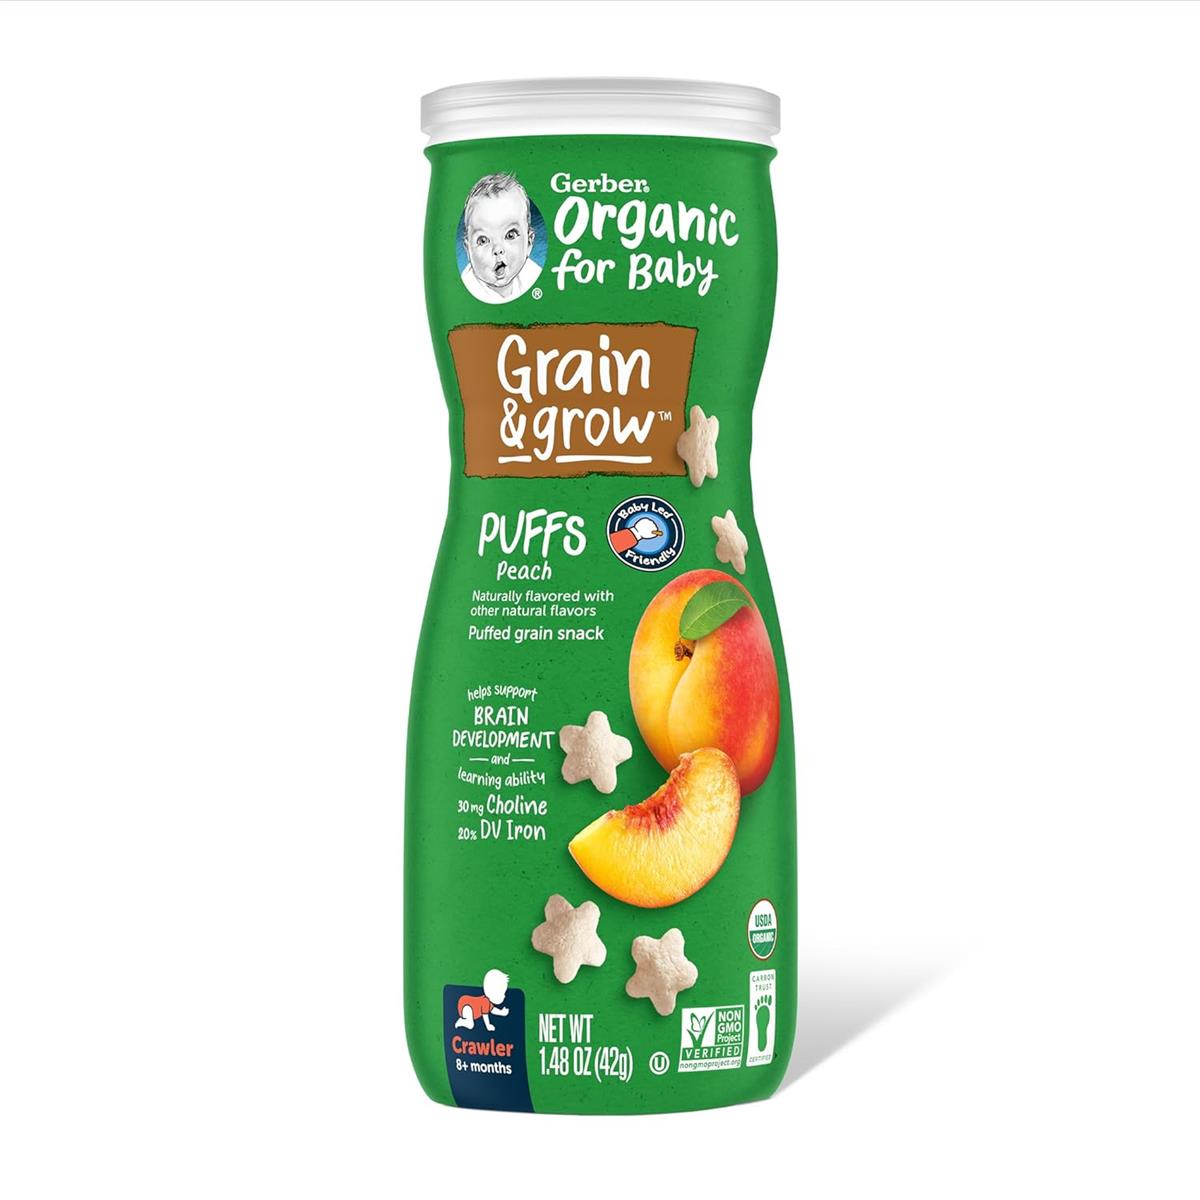 Gerber Organic for Baby, Grow & Grain Puffs for Crawler (1.48oz) - Peach